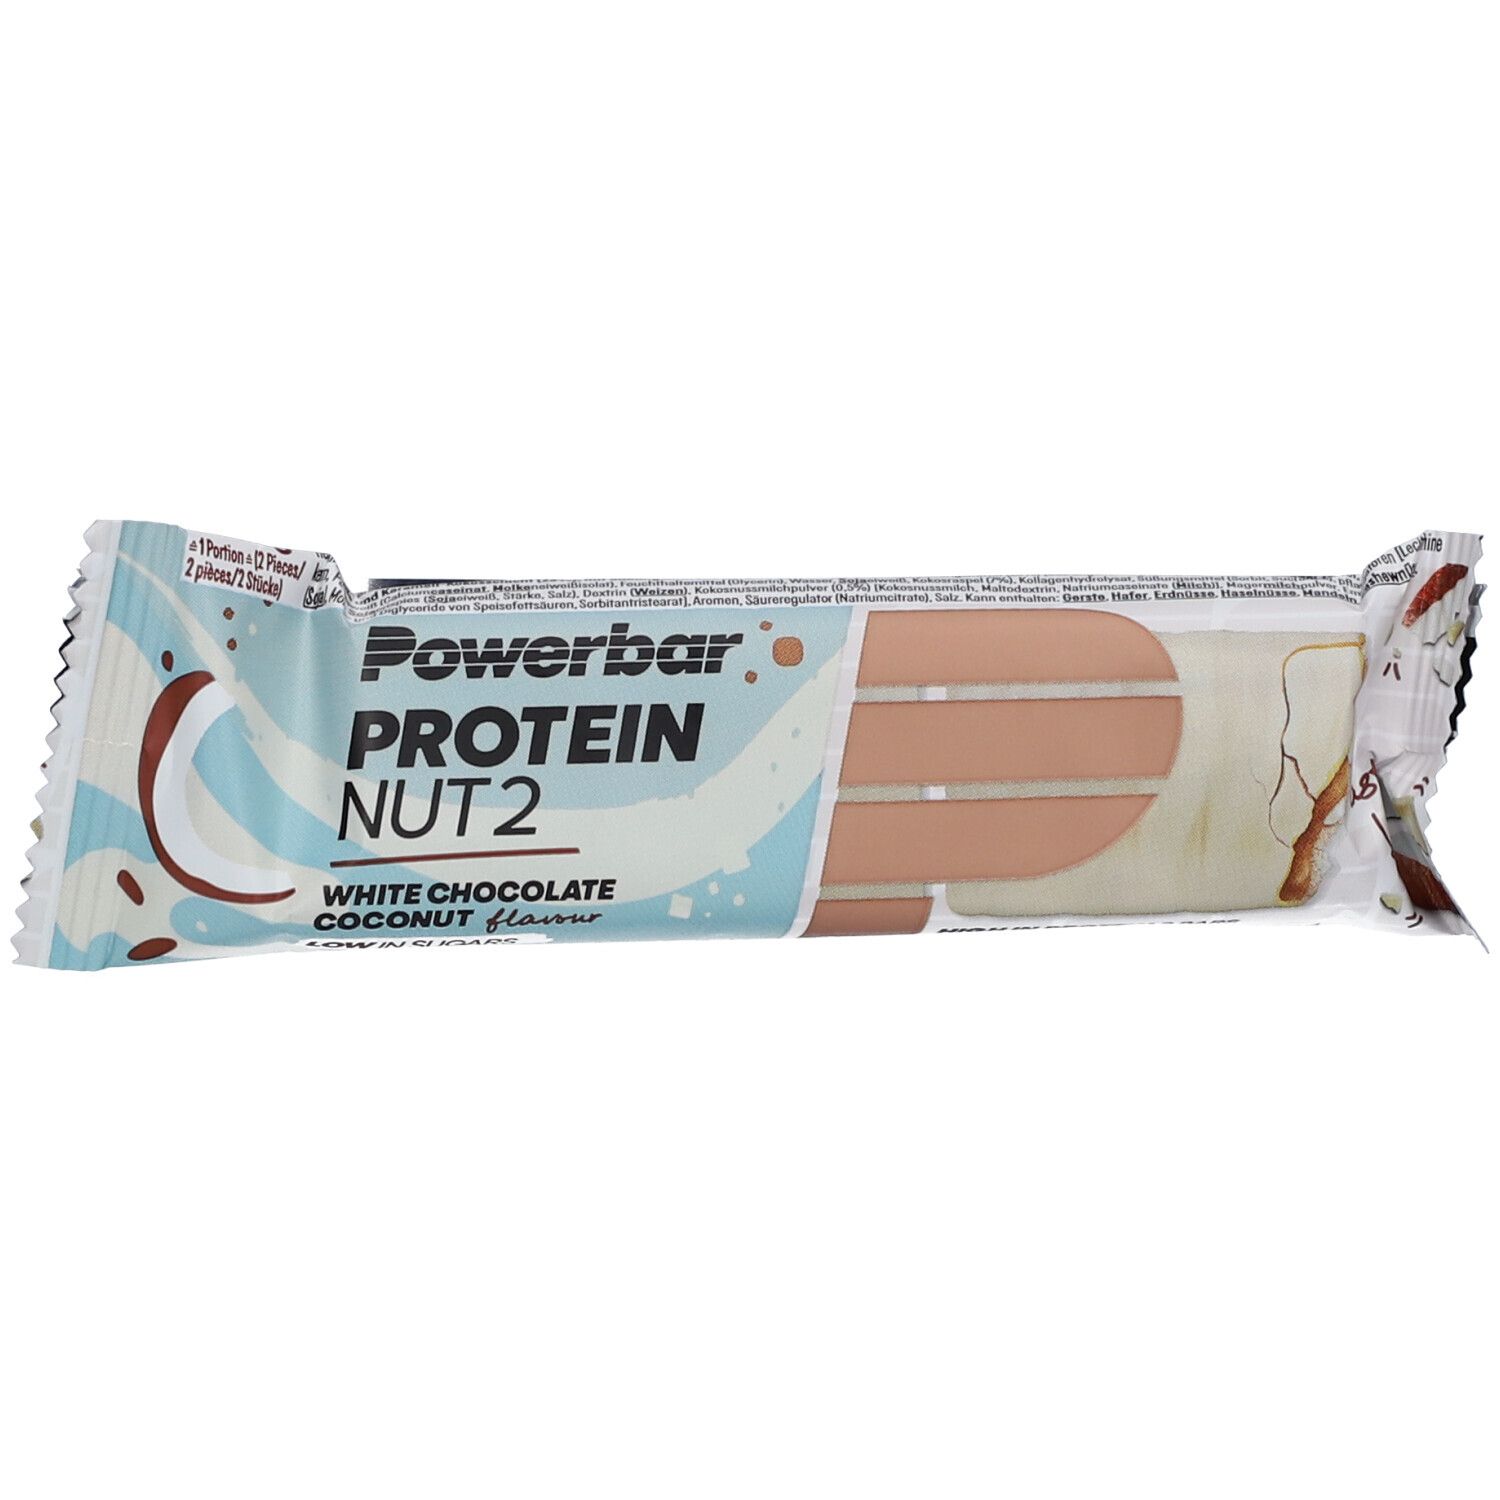 PowerBar® Protein Nut2 White Chocolate Coconut